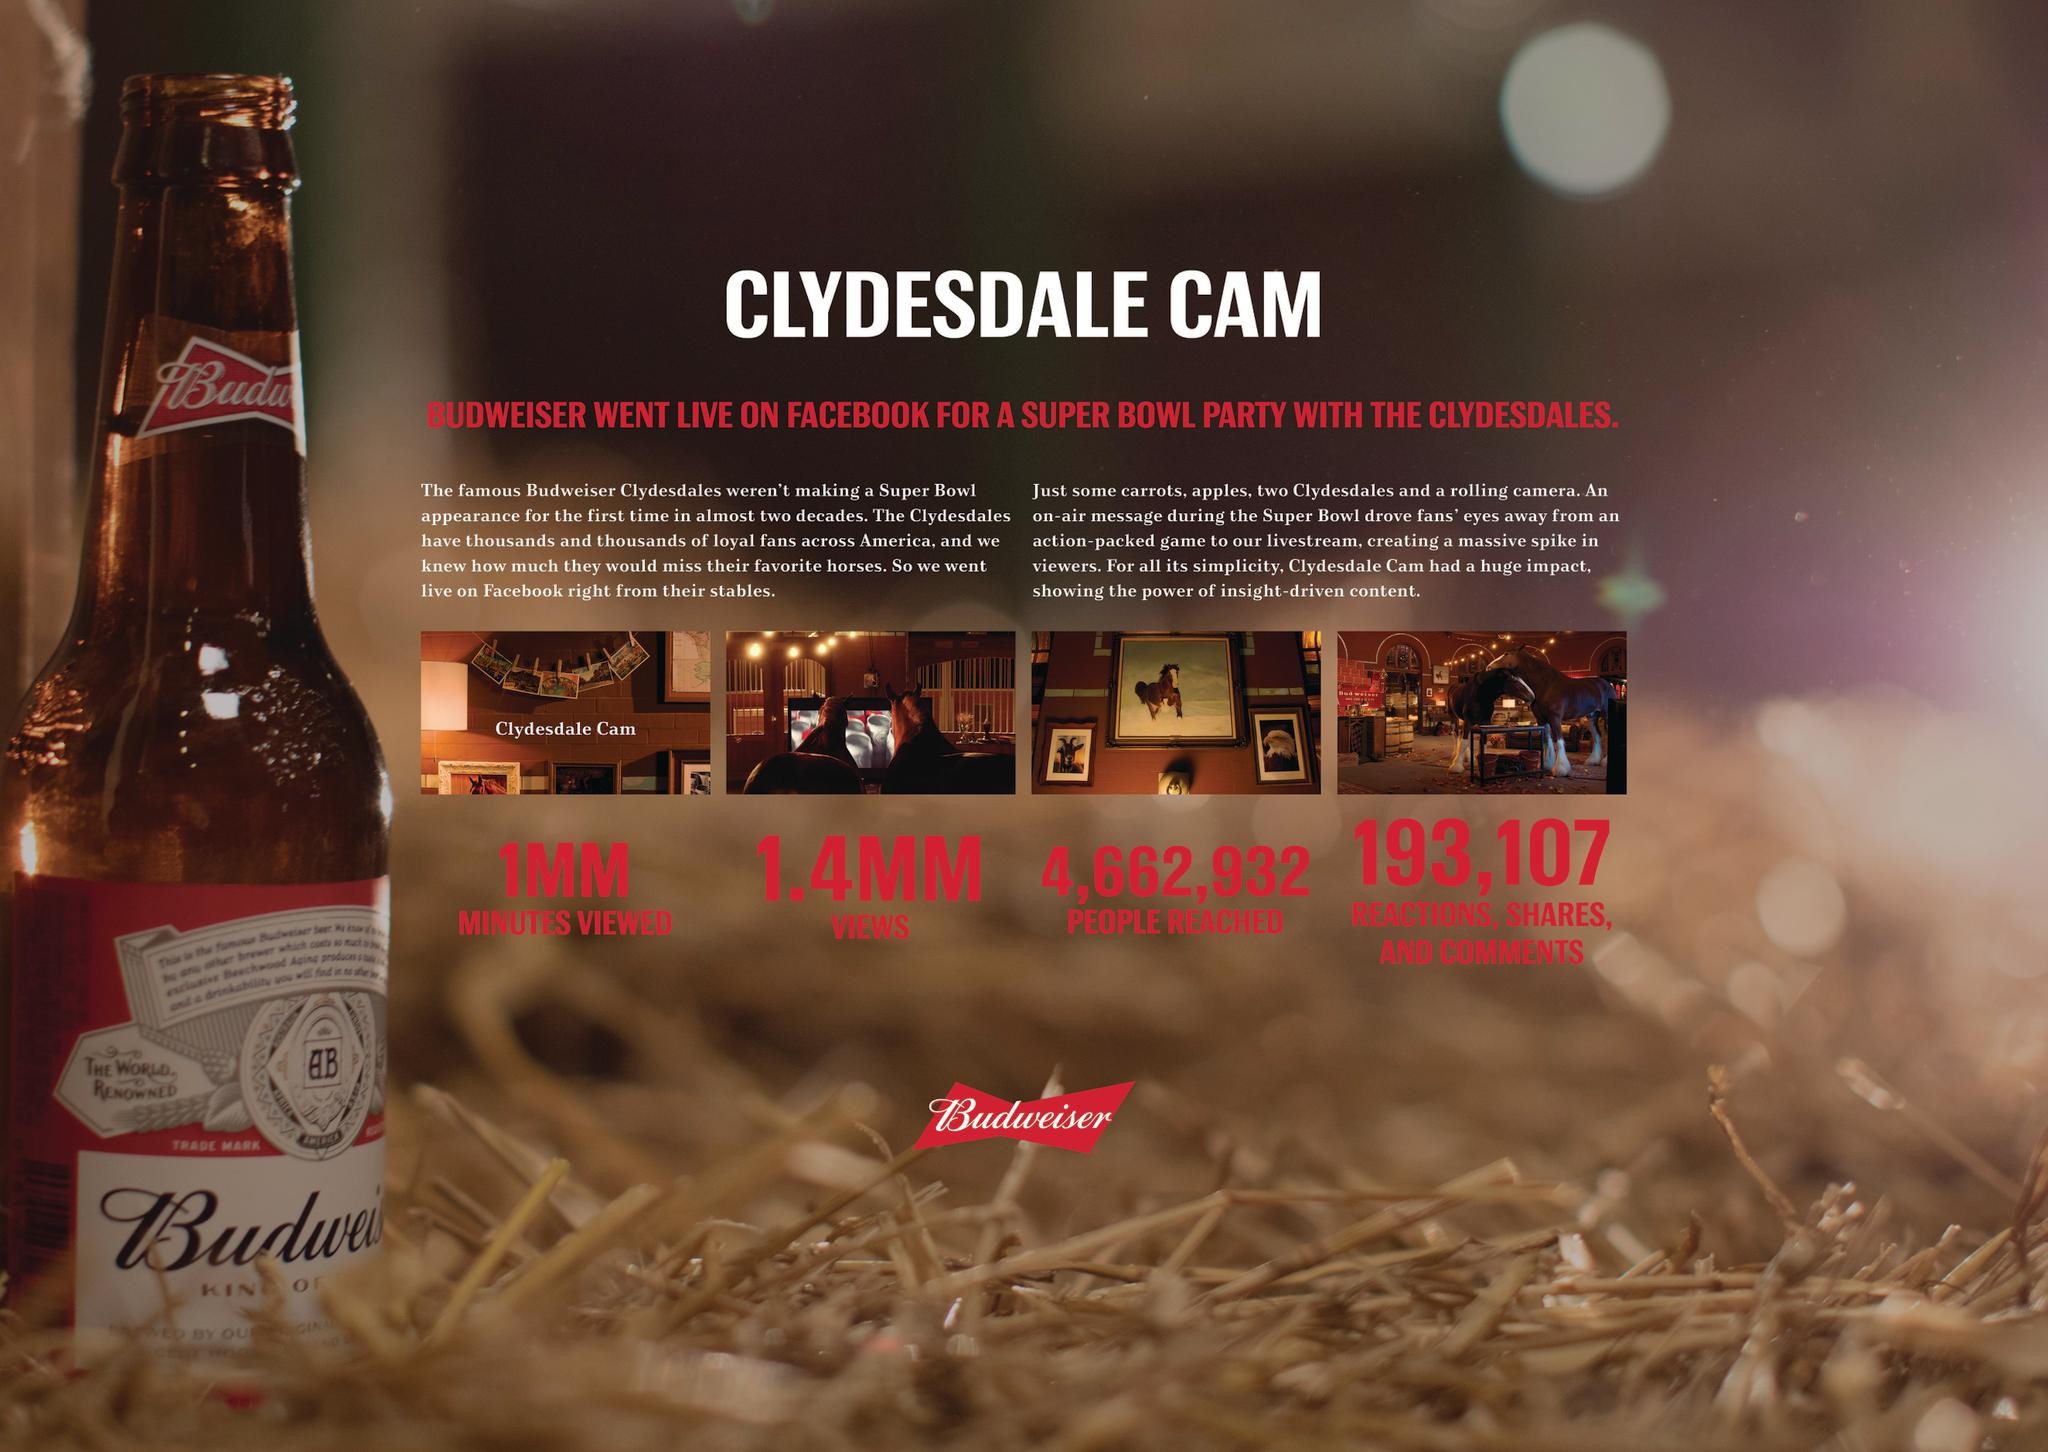 Budweiser: Clydesdale Cam